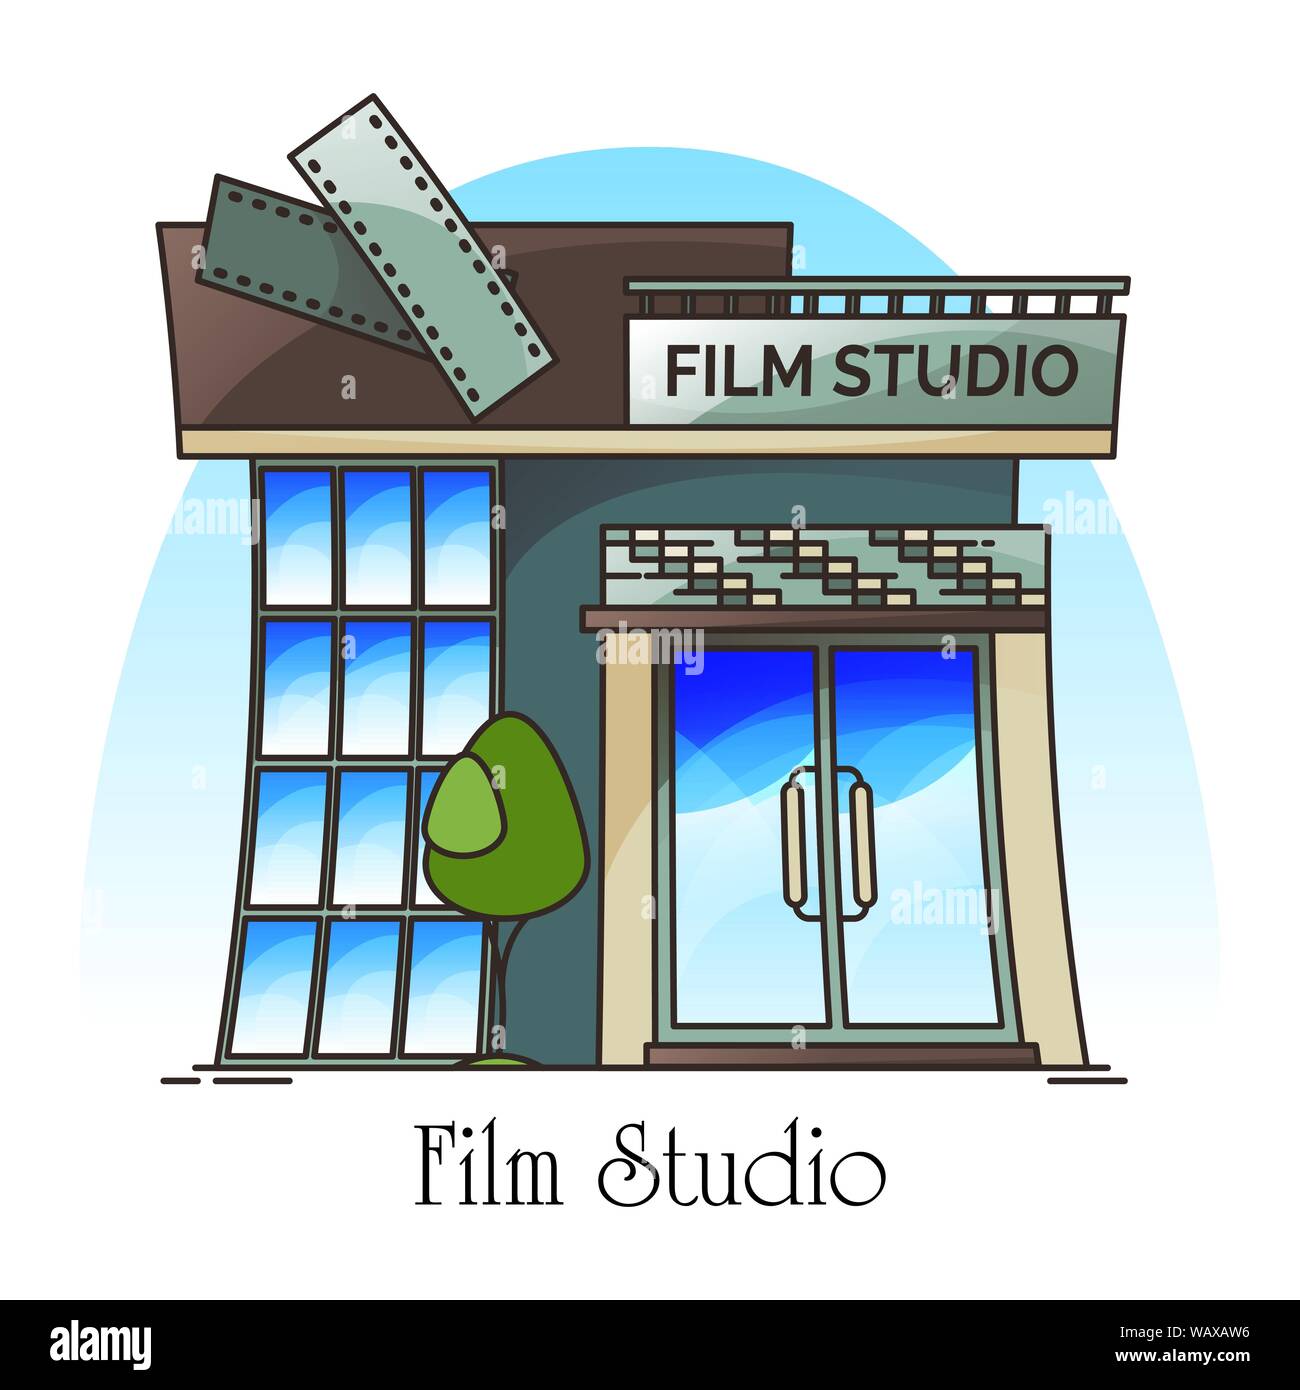 Film studio or movie creation company Stock Vector